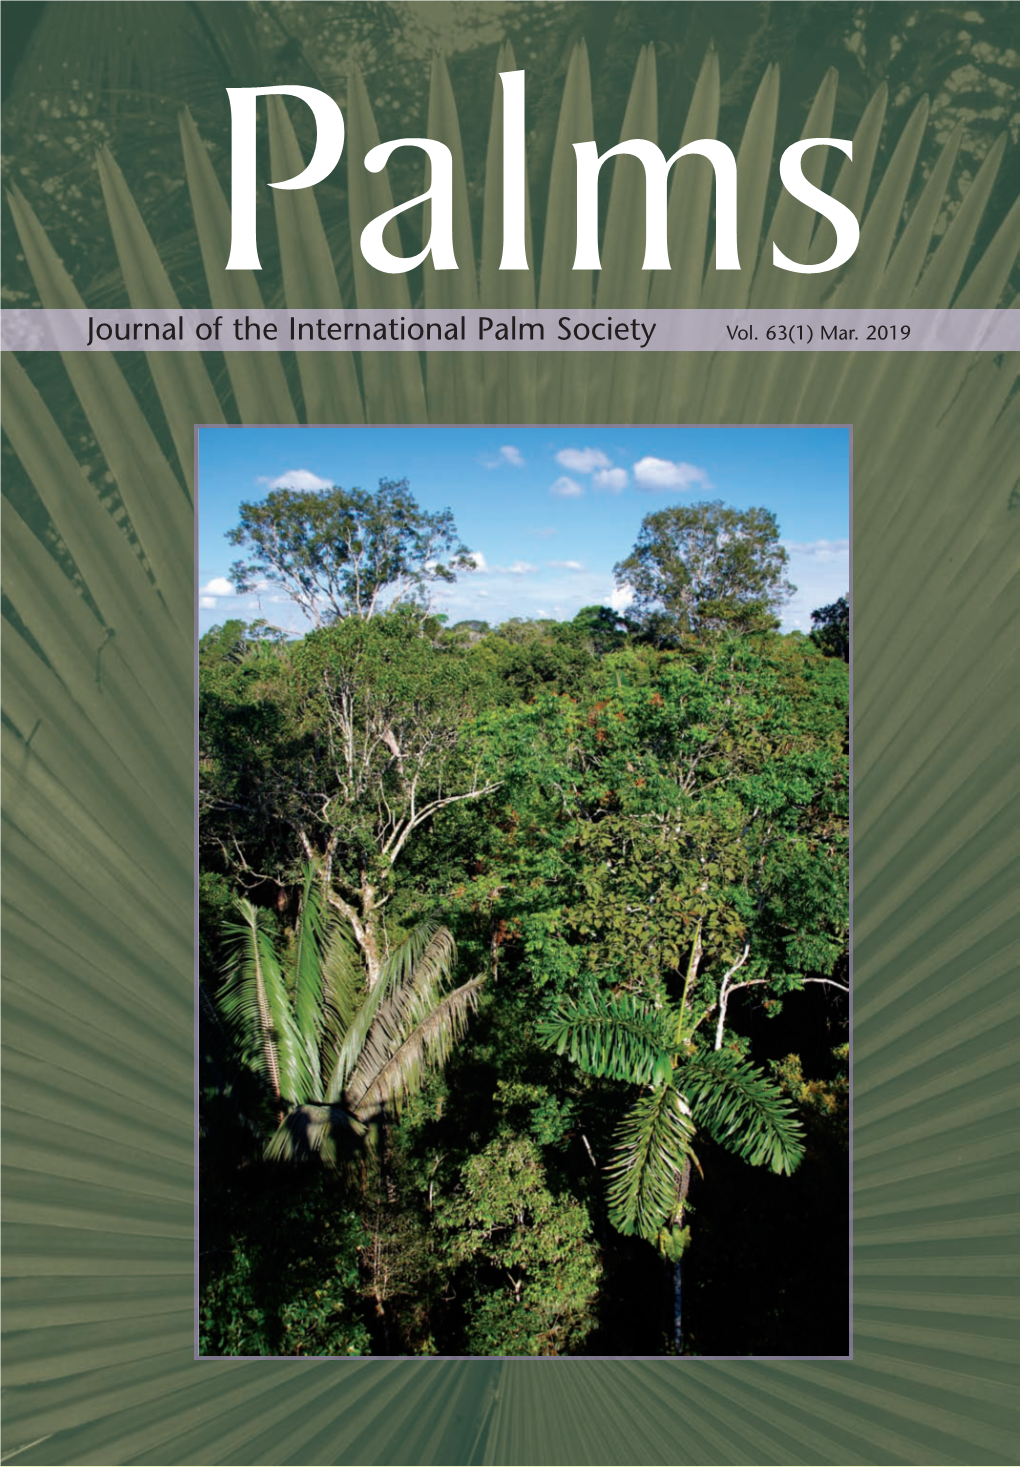 Journal of the International Palm Society Vol. 63(1) Mar. 2019 the INTERNATIONAL PALM SOCIETY, INC